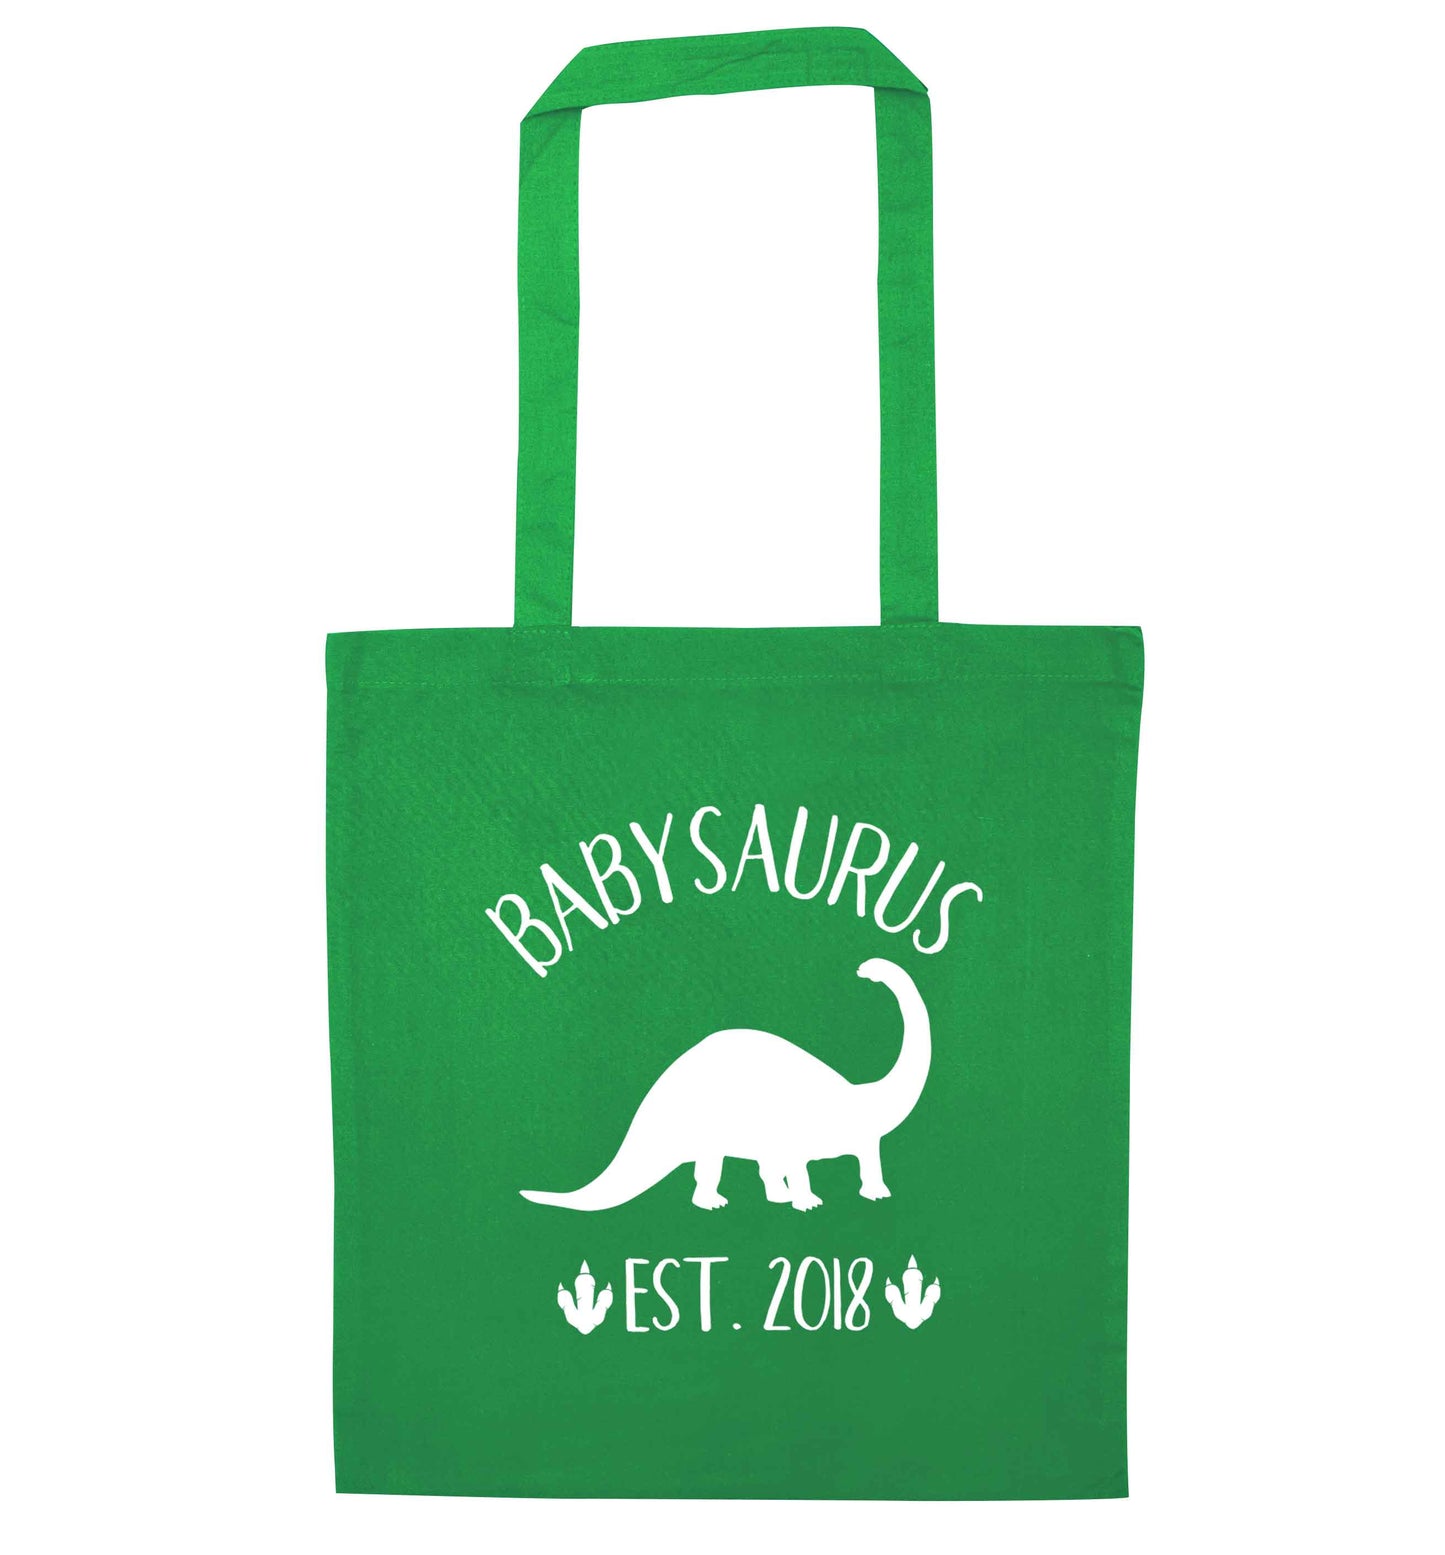 Personalised babysaurus since (custom date) green tote bag